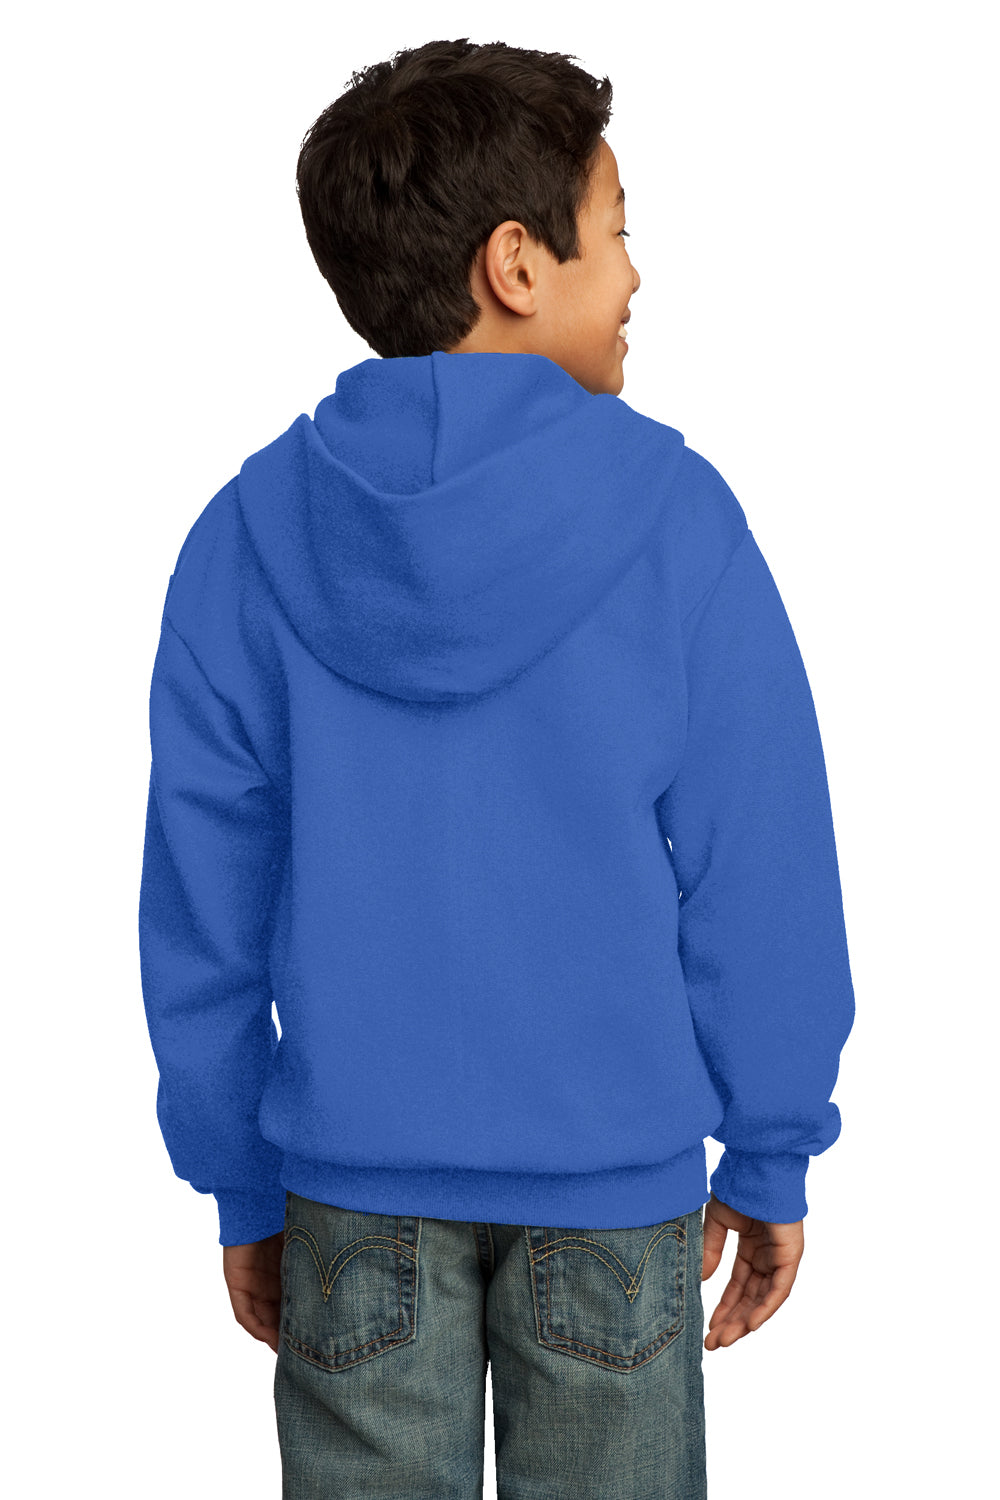 Port & Company PC90YZH Youth Core Fleece Full Zip Hooded Sweatshirt Hoodie Royal Blue Back